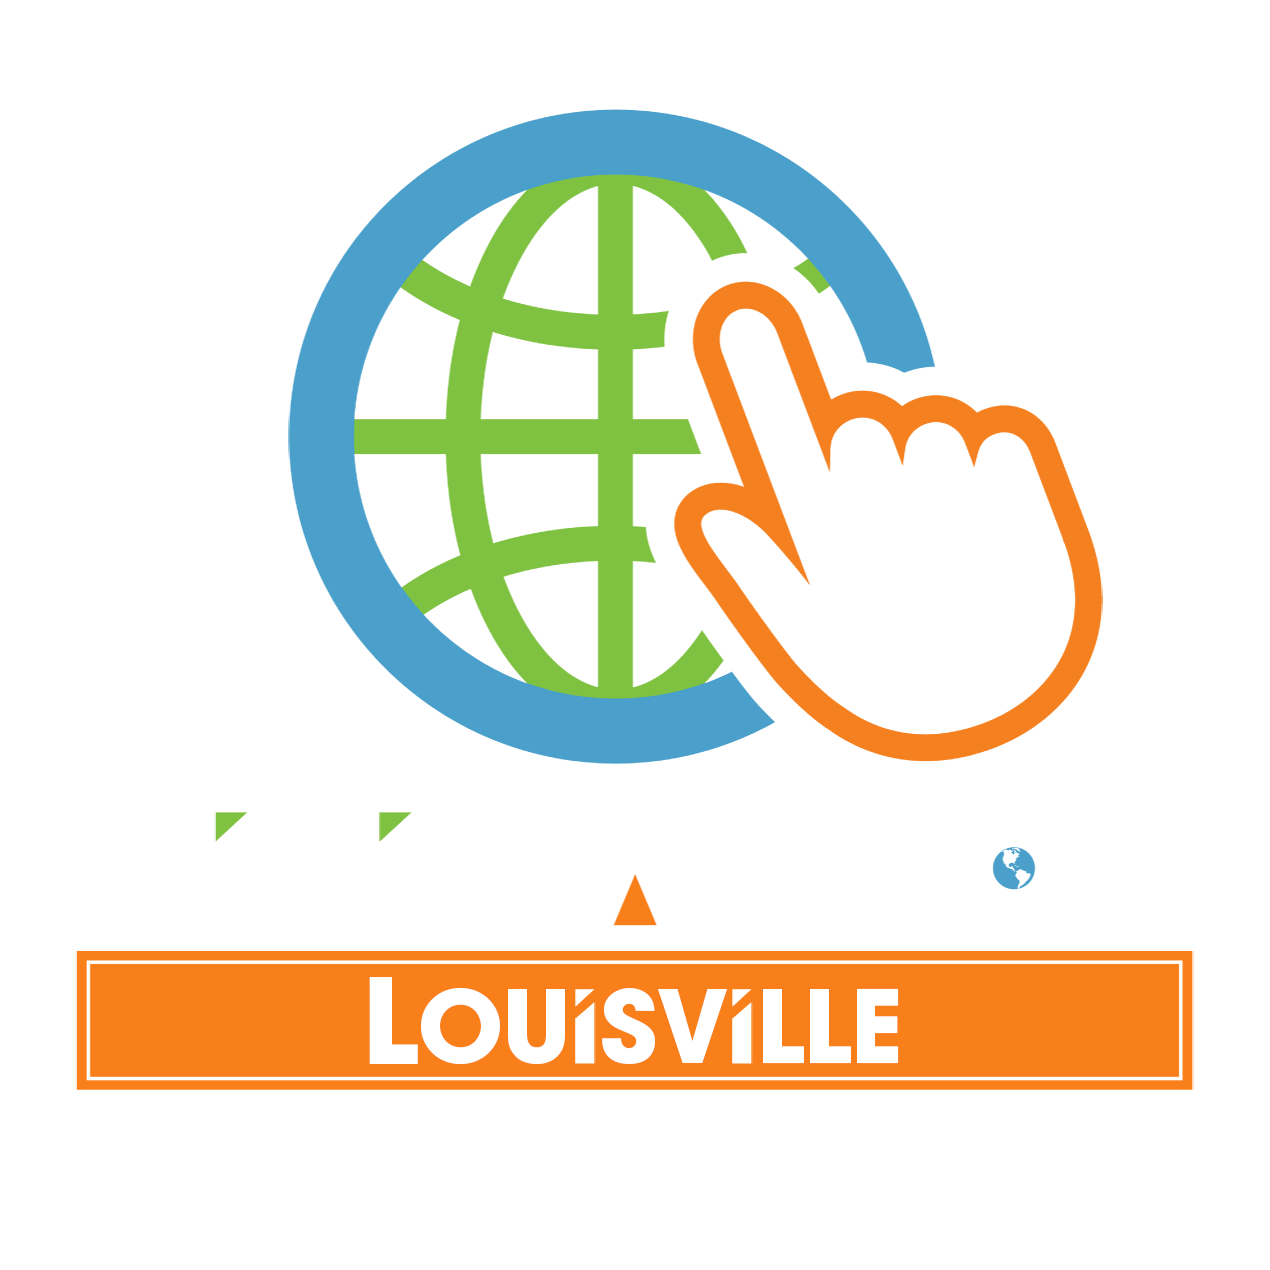 Louisville Digital Marketing, Media & Advertising Conference